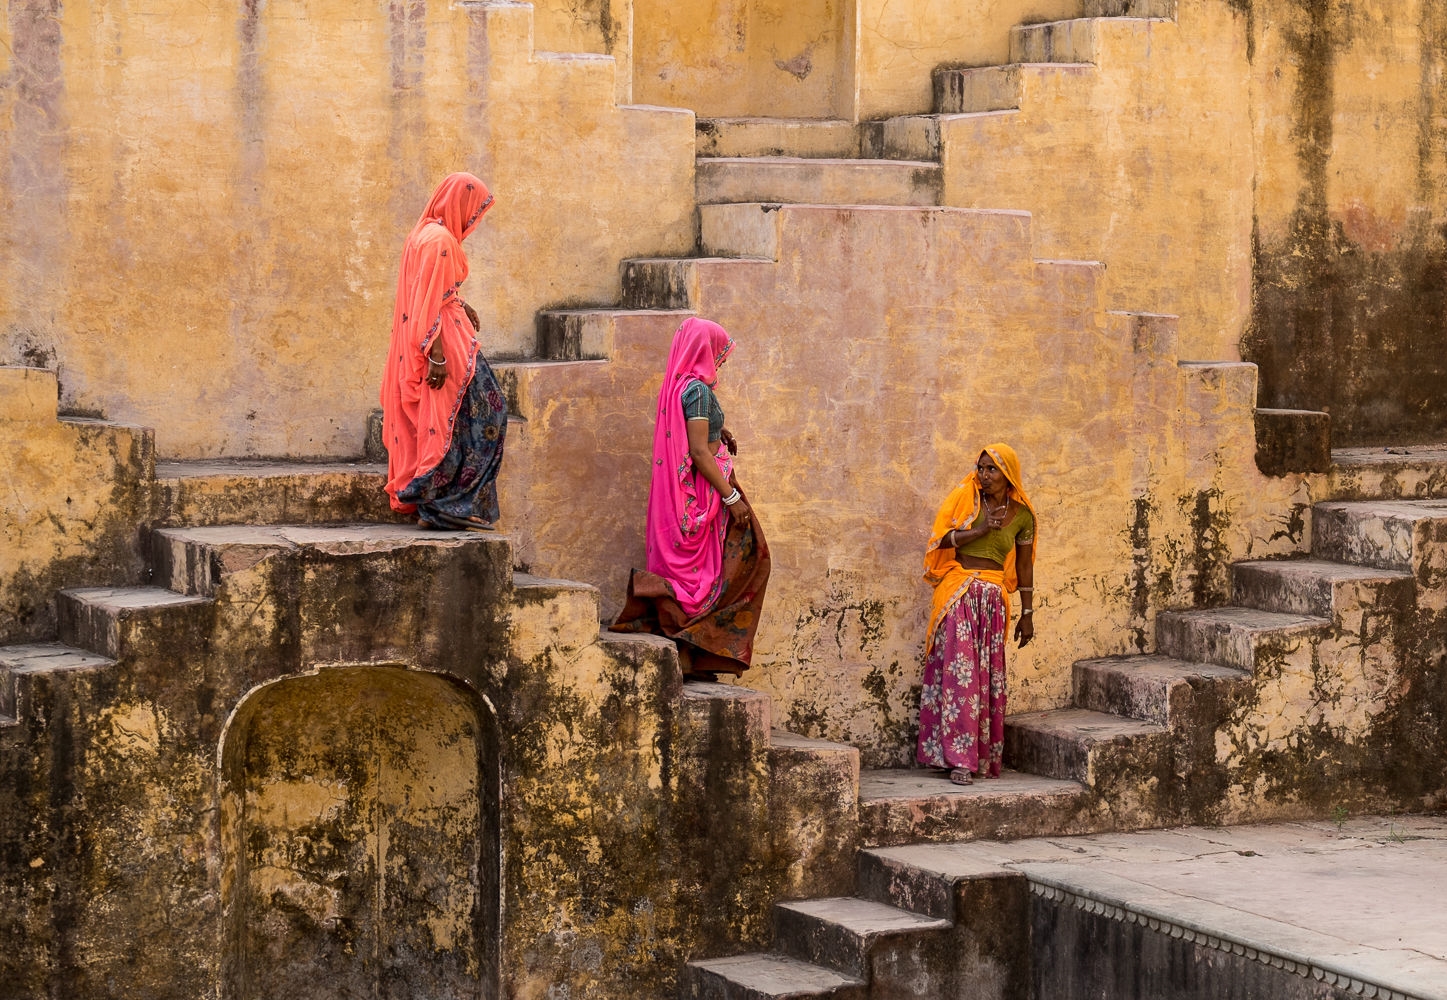  At the stepwell, near Jaipur 